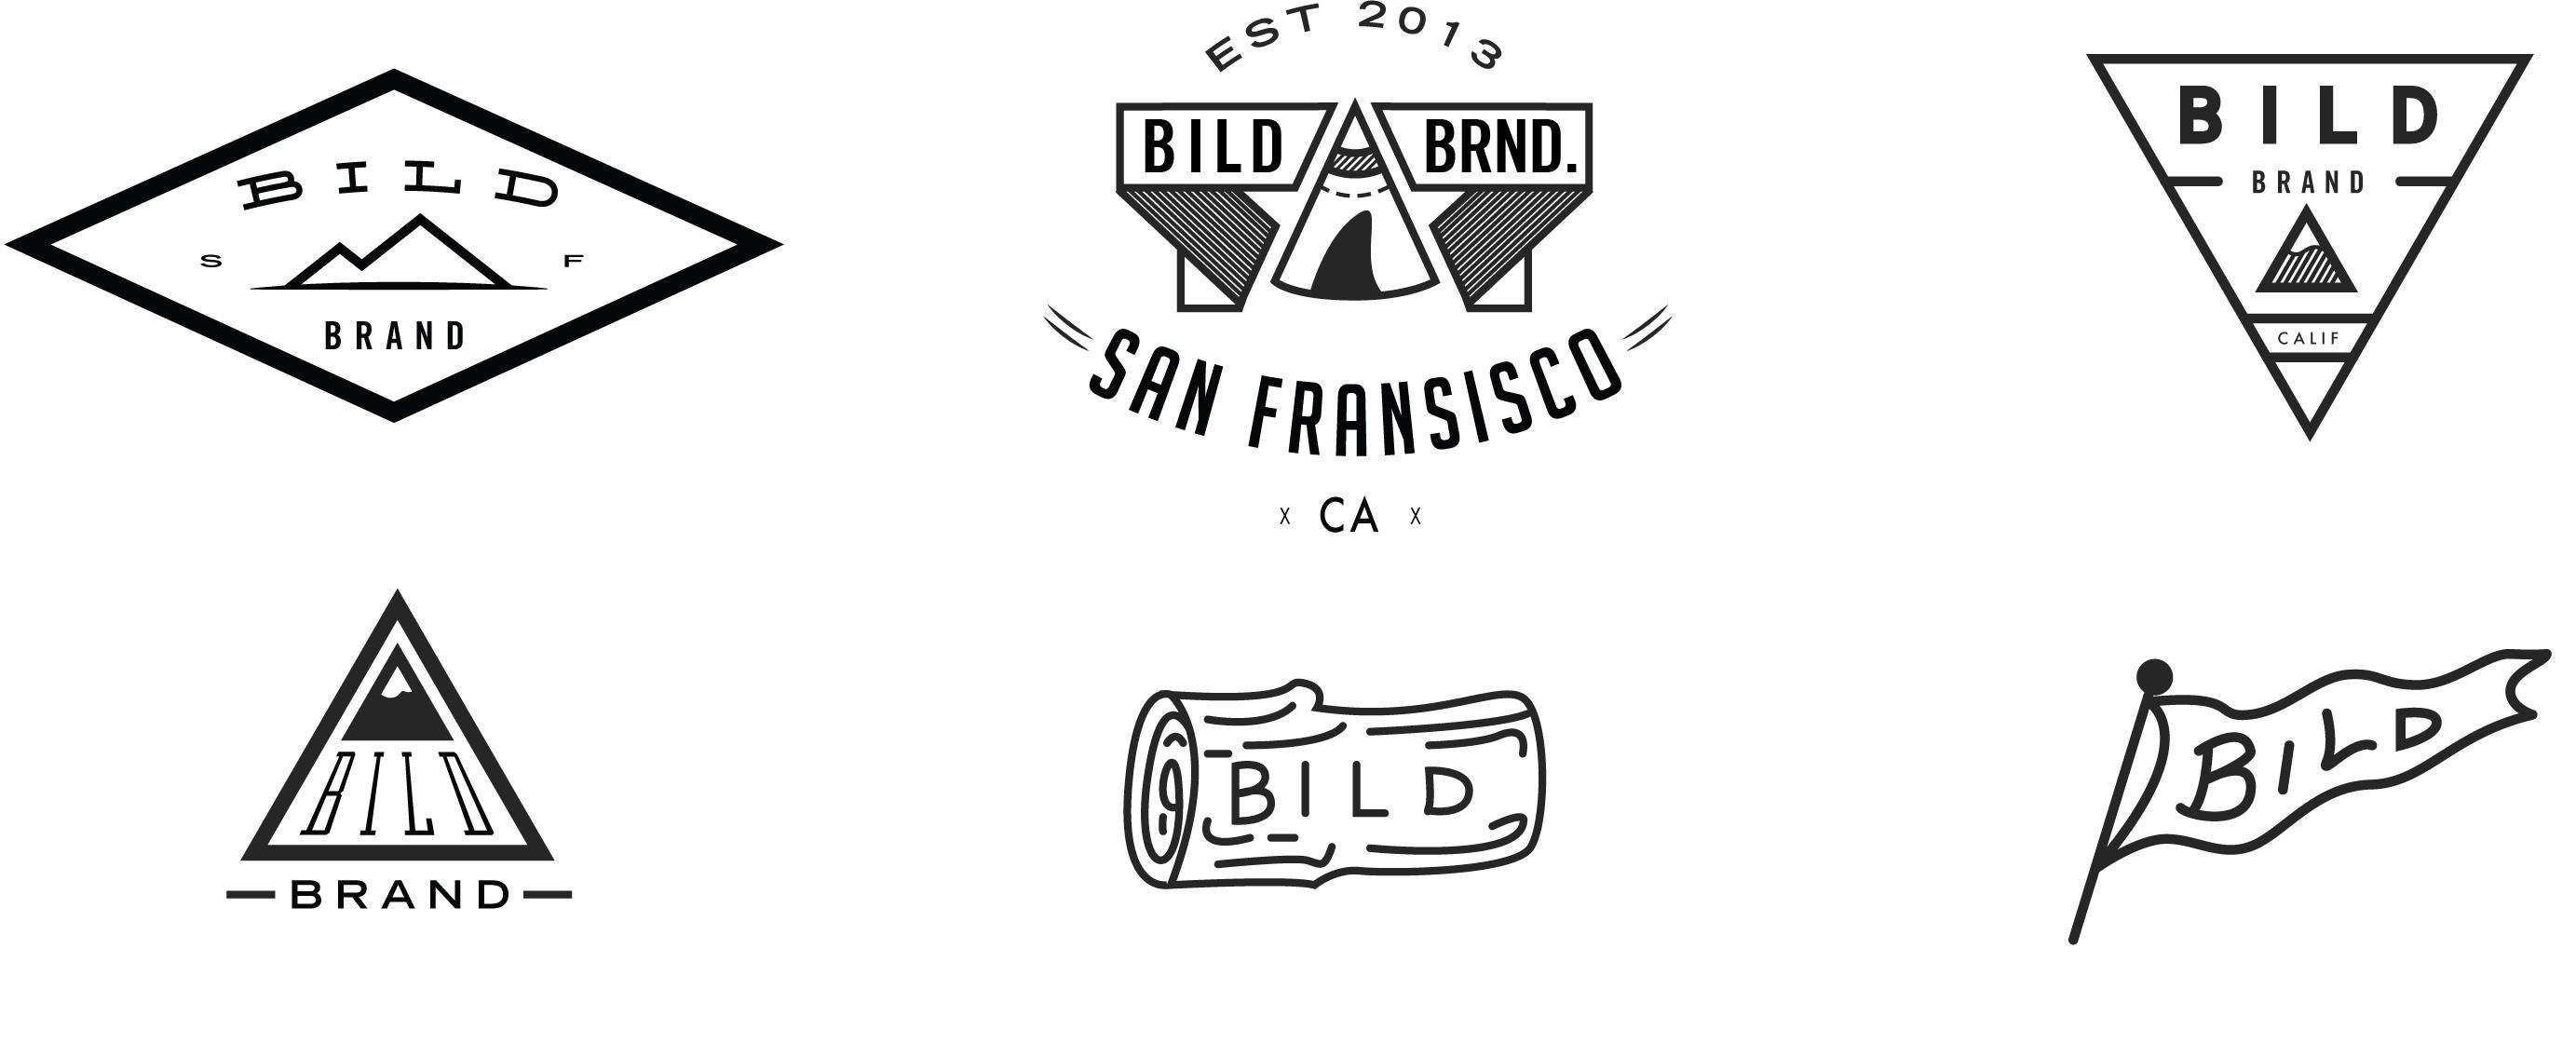 Upside Down Triangle Logo - BILD Brand Identiy Design | Skillshare Projects